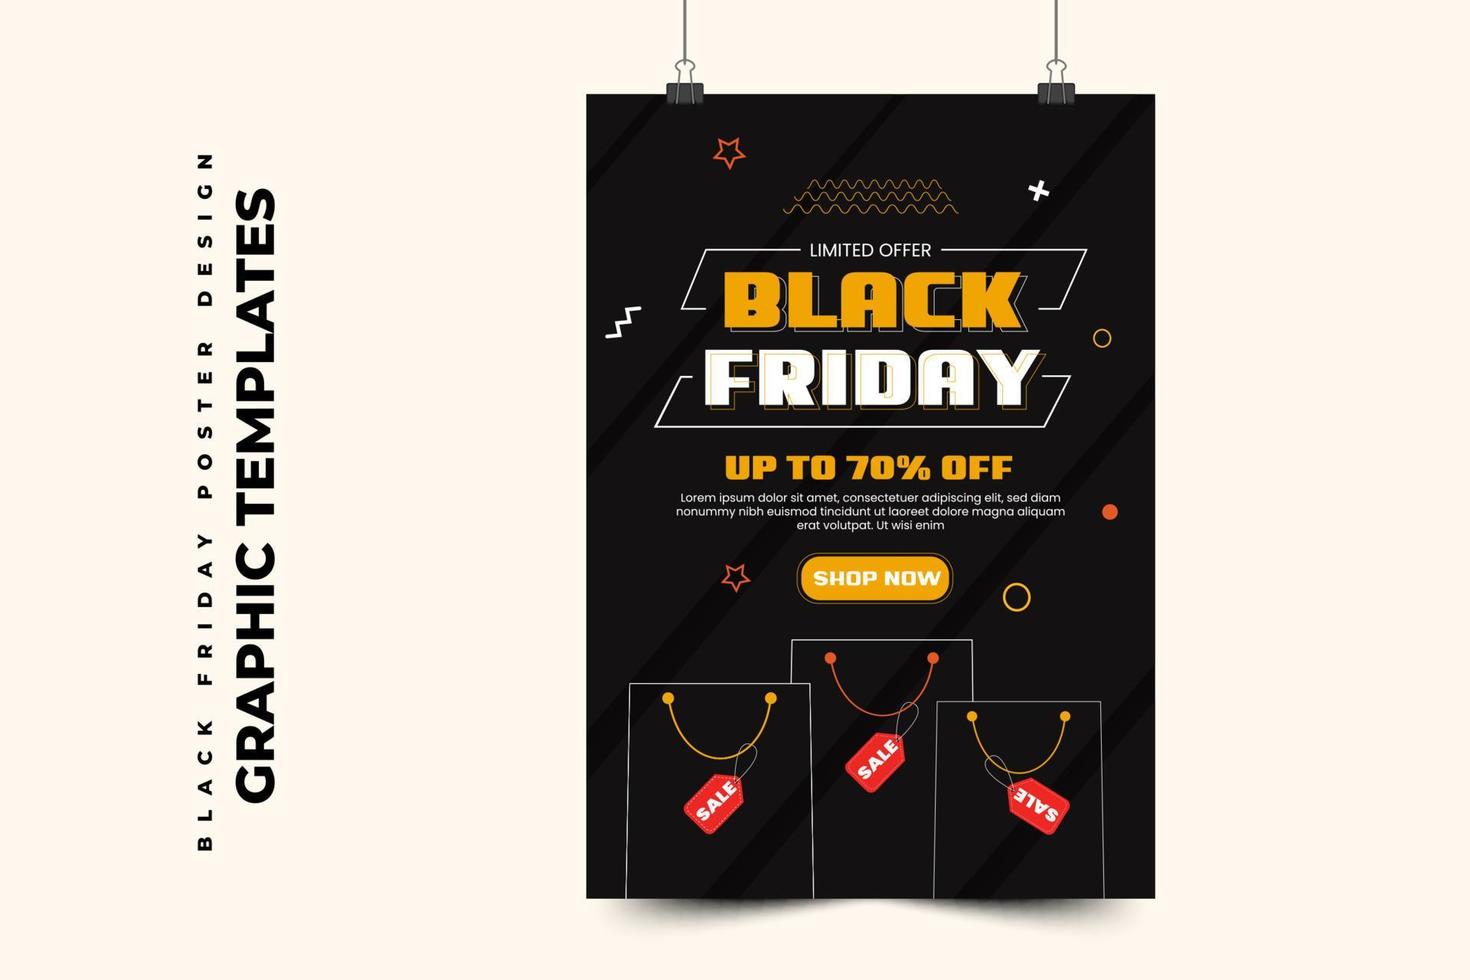 Black Friday-Verkaufsplakat oder Flyer-Design-Vorlage vektor